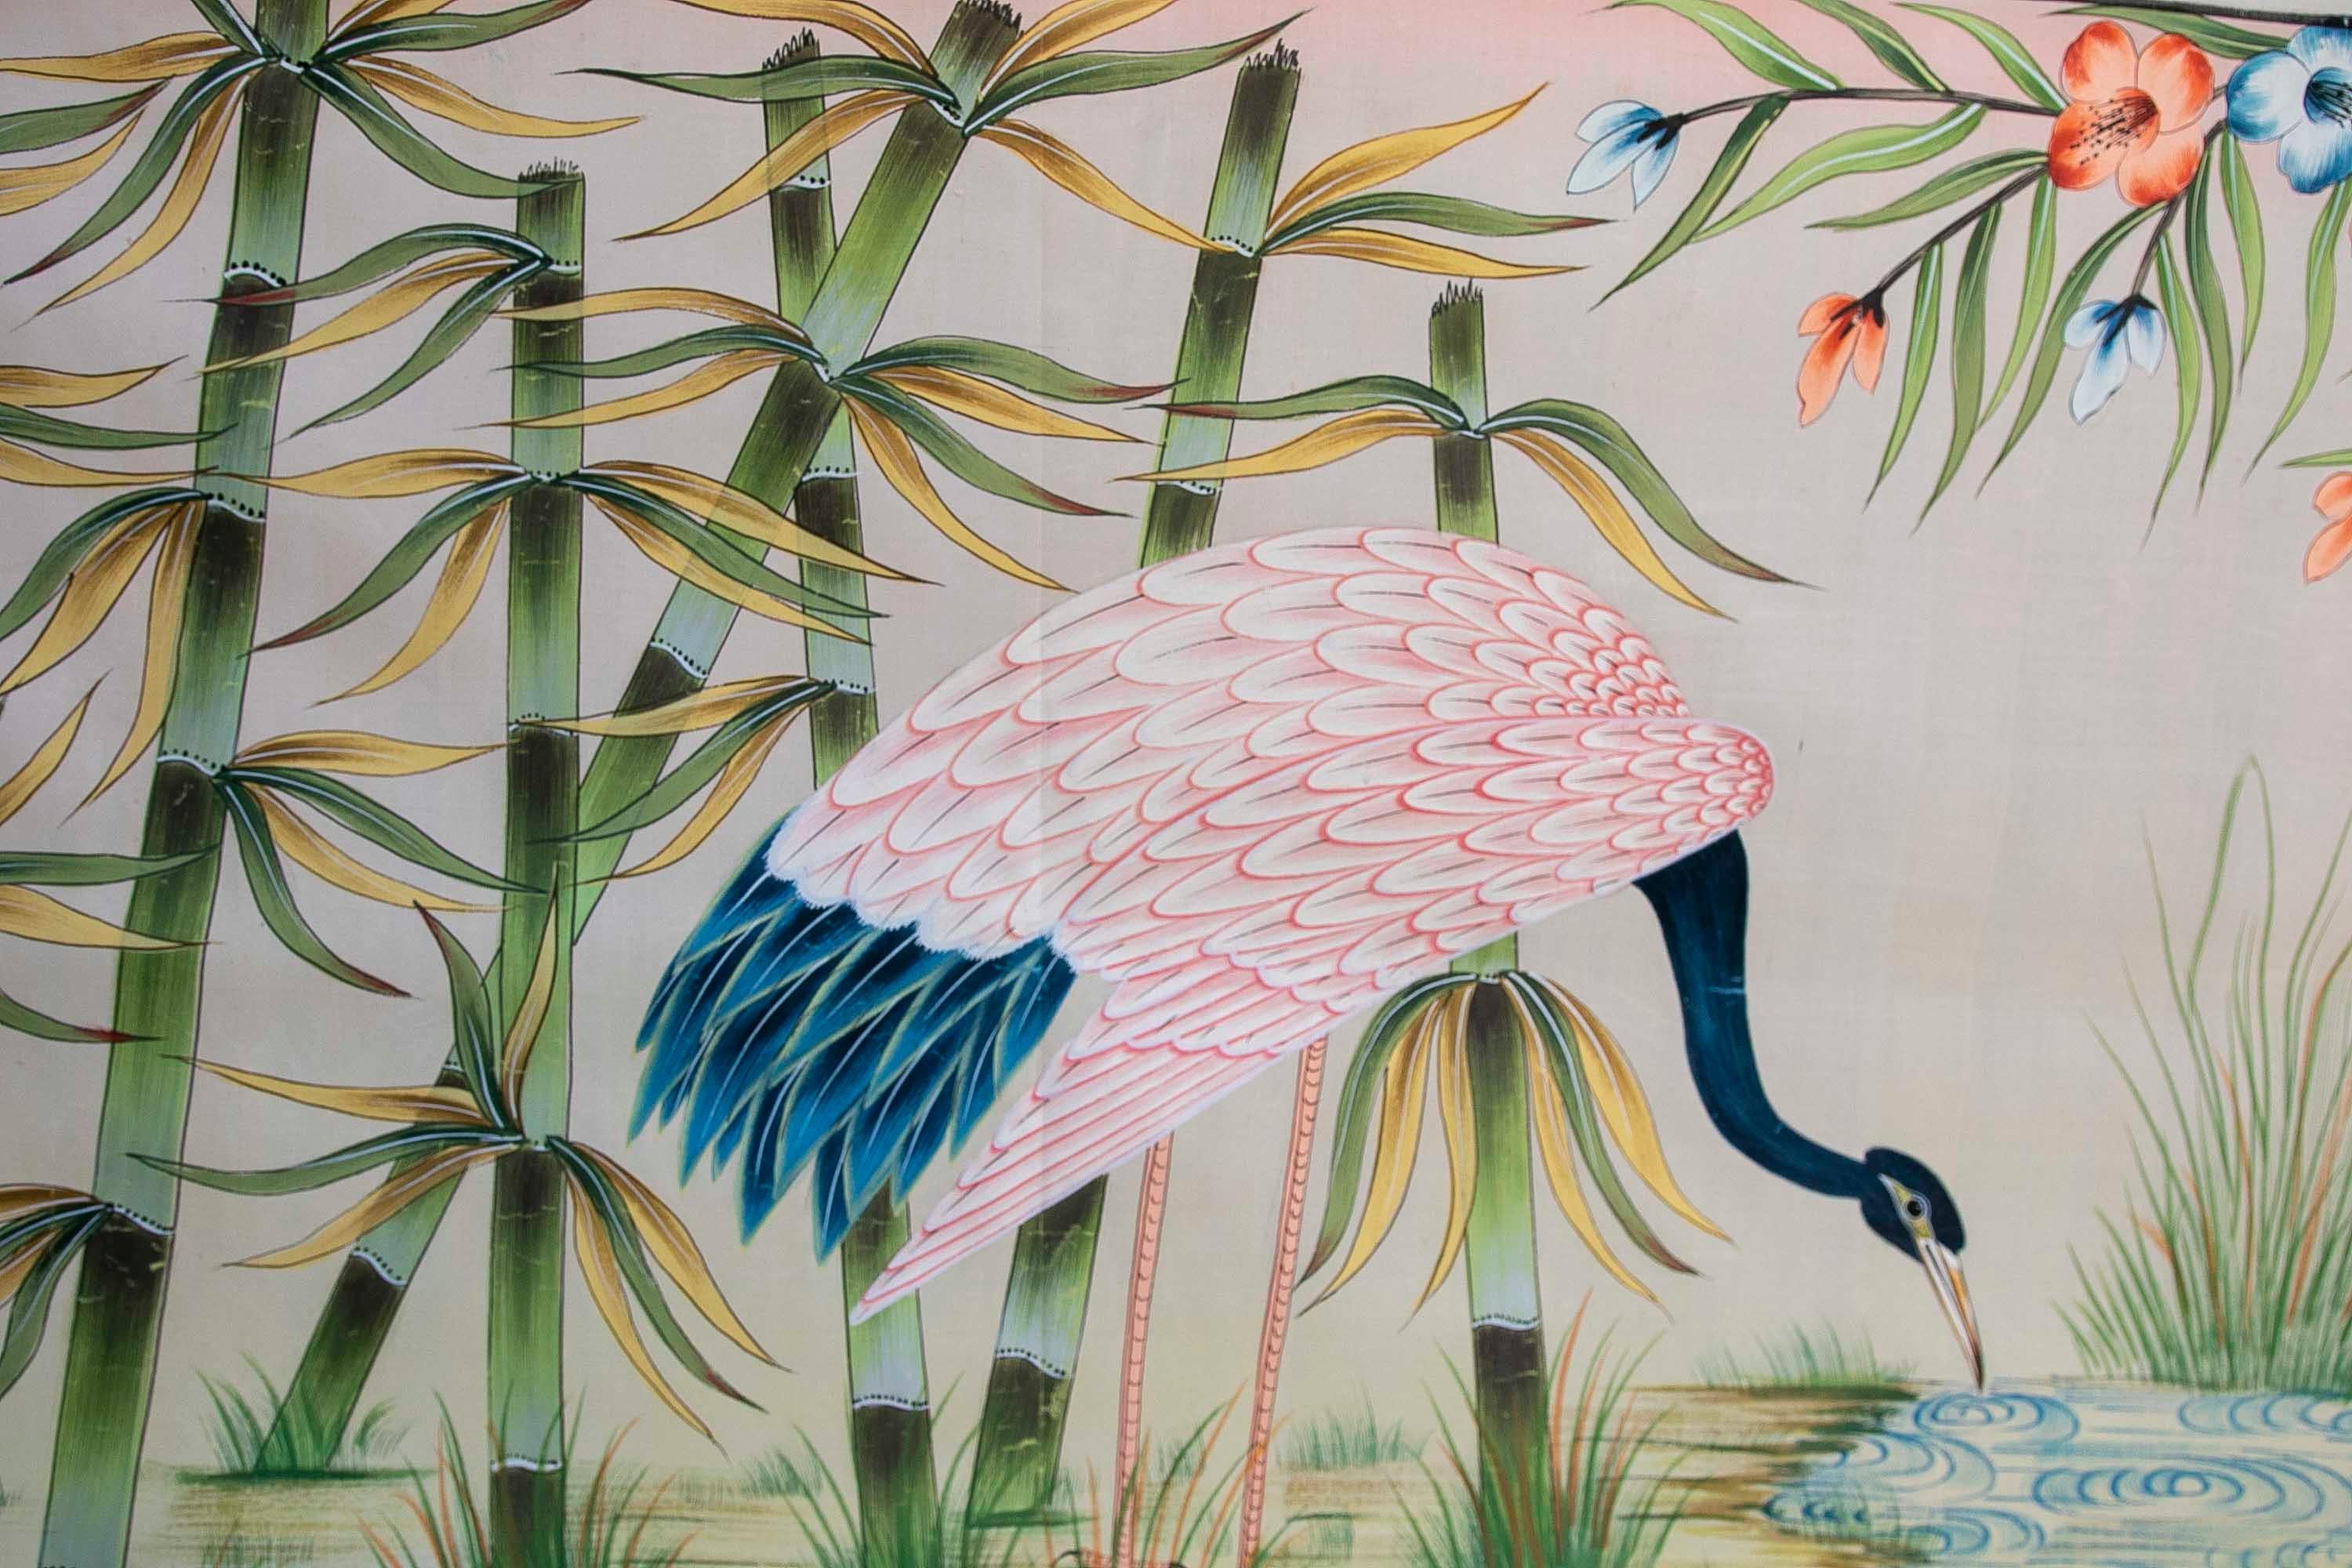 Cuadro de aves en lago con flores pintado a mano sobre lienzo años 1970.